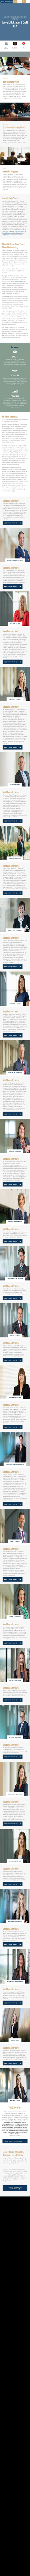 JOSEPH HOLLANDER & CRAFT - Wichita KS Lawyers